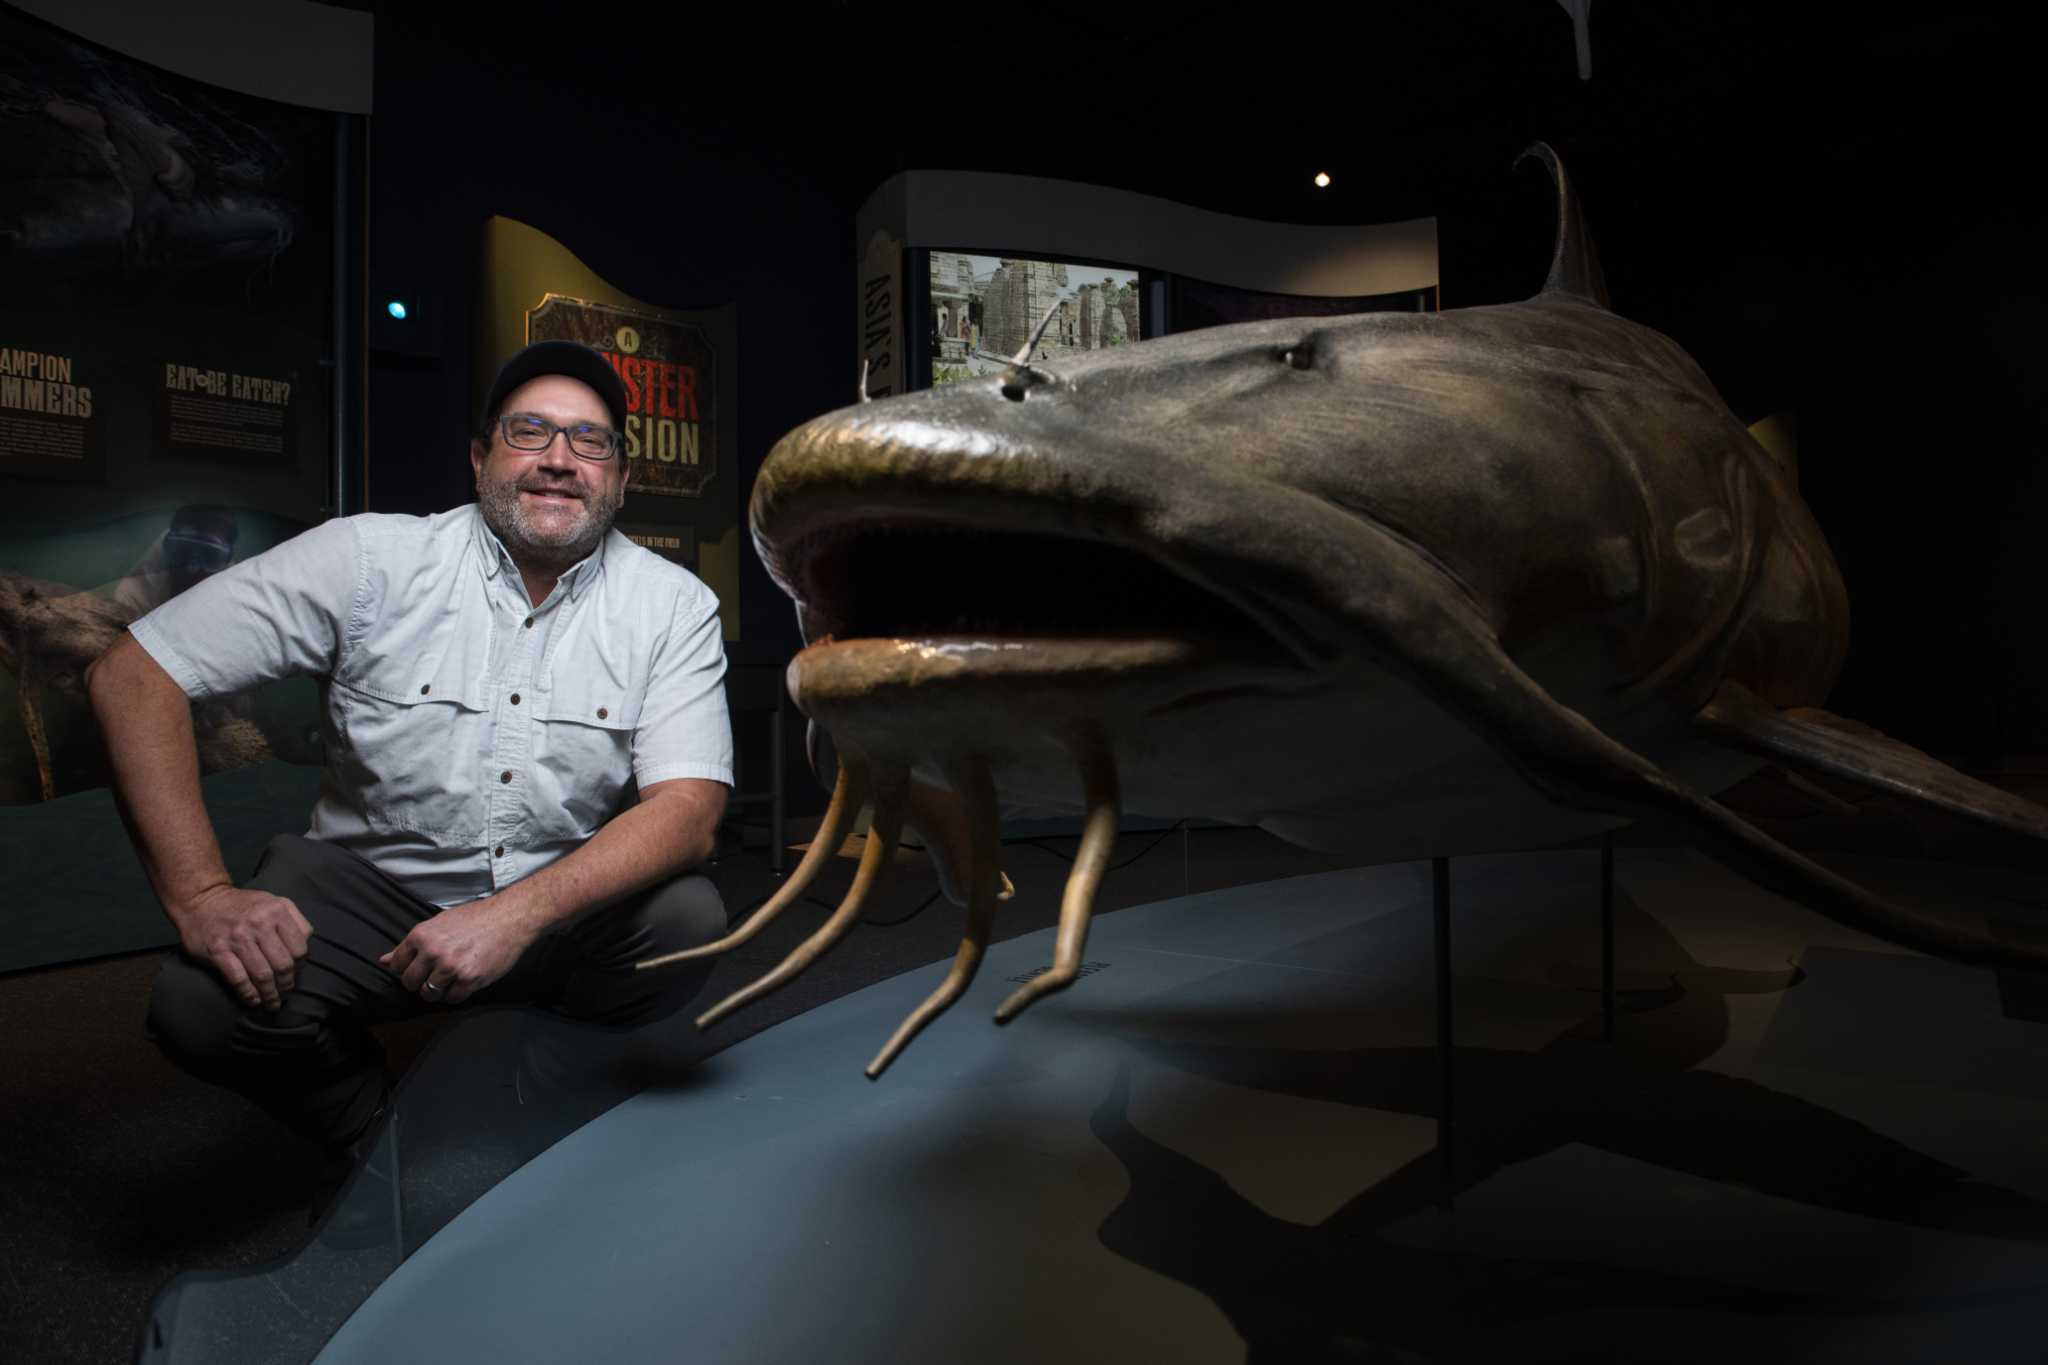 National Geographic's giant fish San Antonio exhibit ending soon